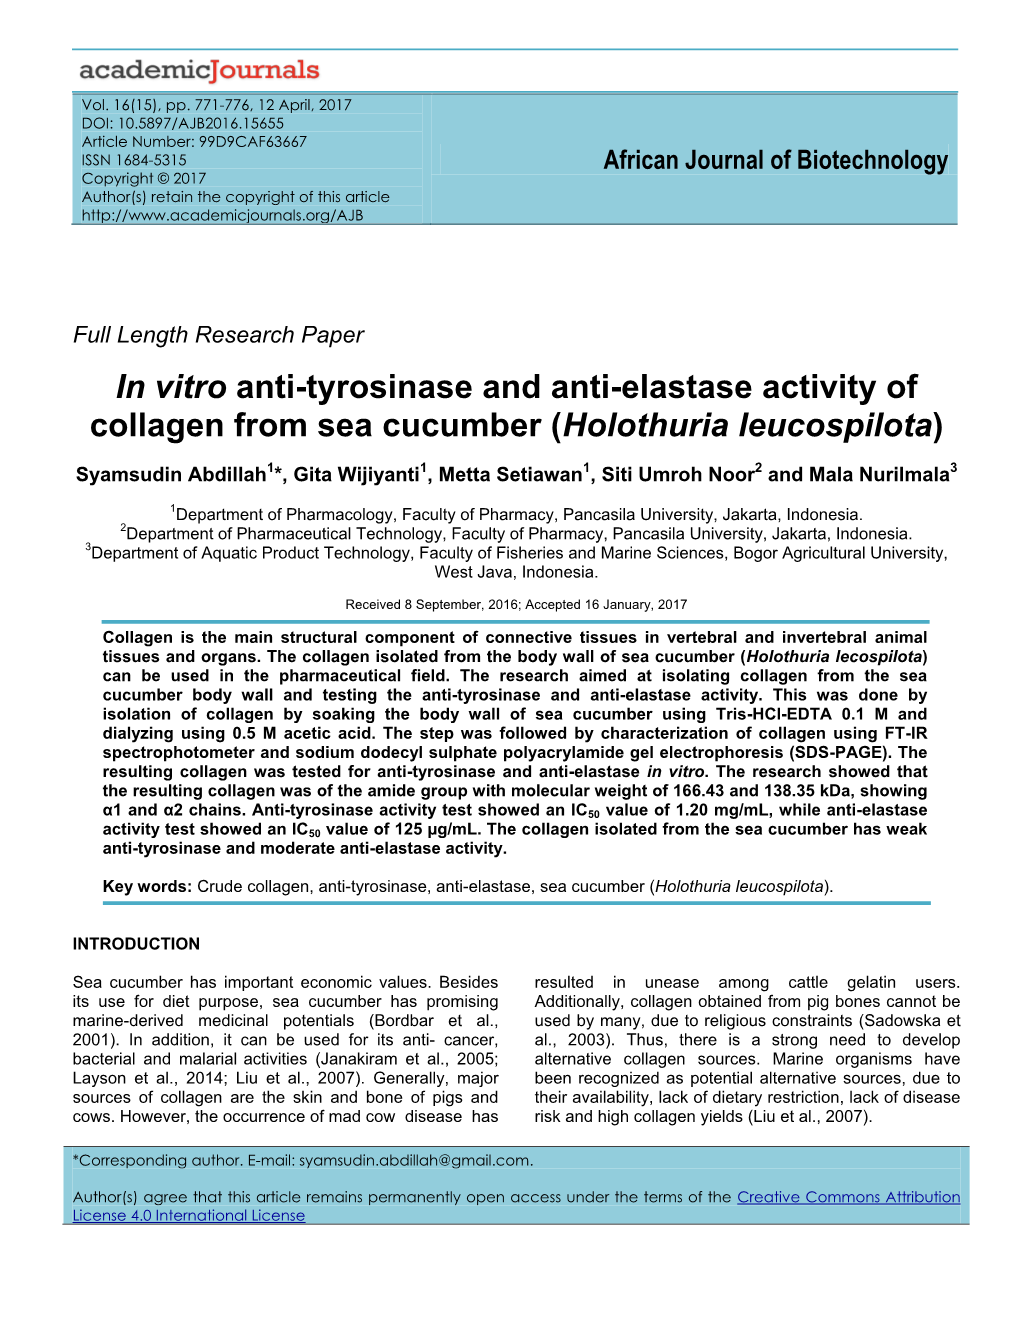 In Vitro Anti-Tyrosinase and Anti-Elastase Activity of Collagen from Sea Cucumber (Holothuria Leucospilota)